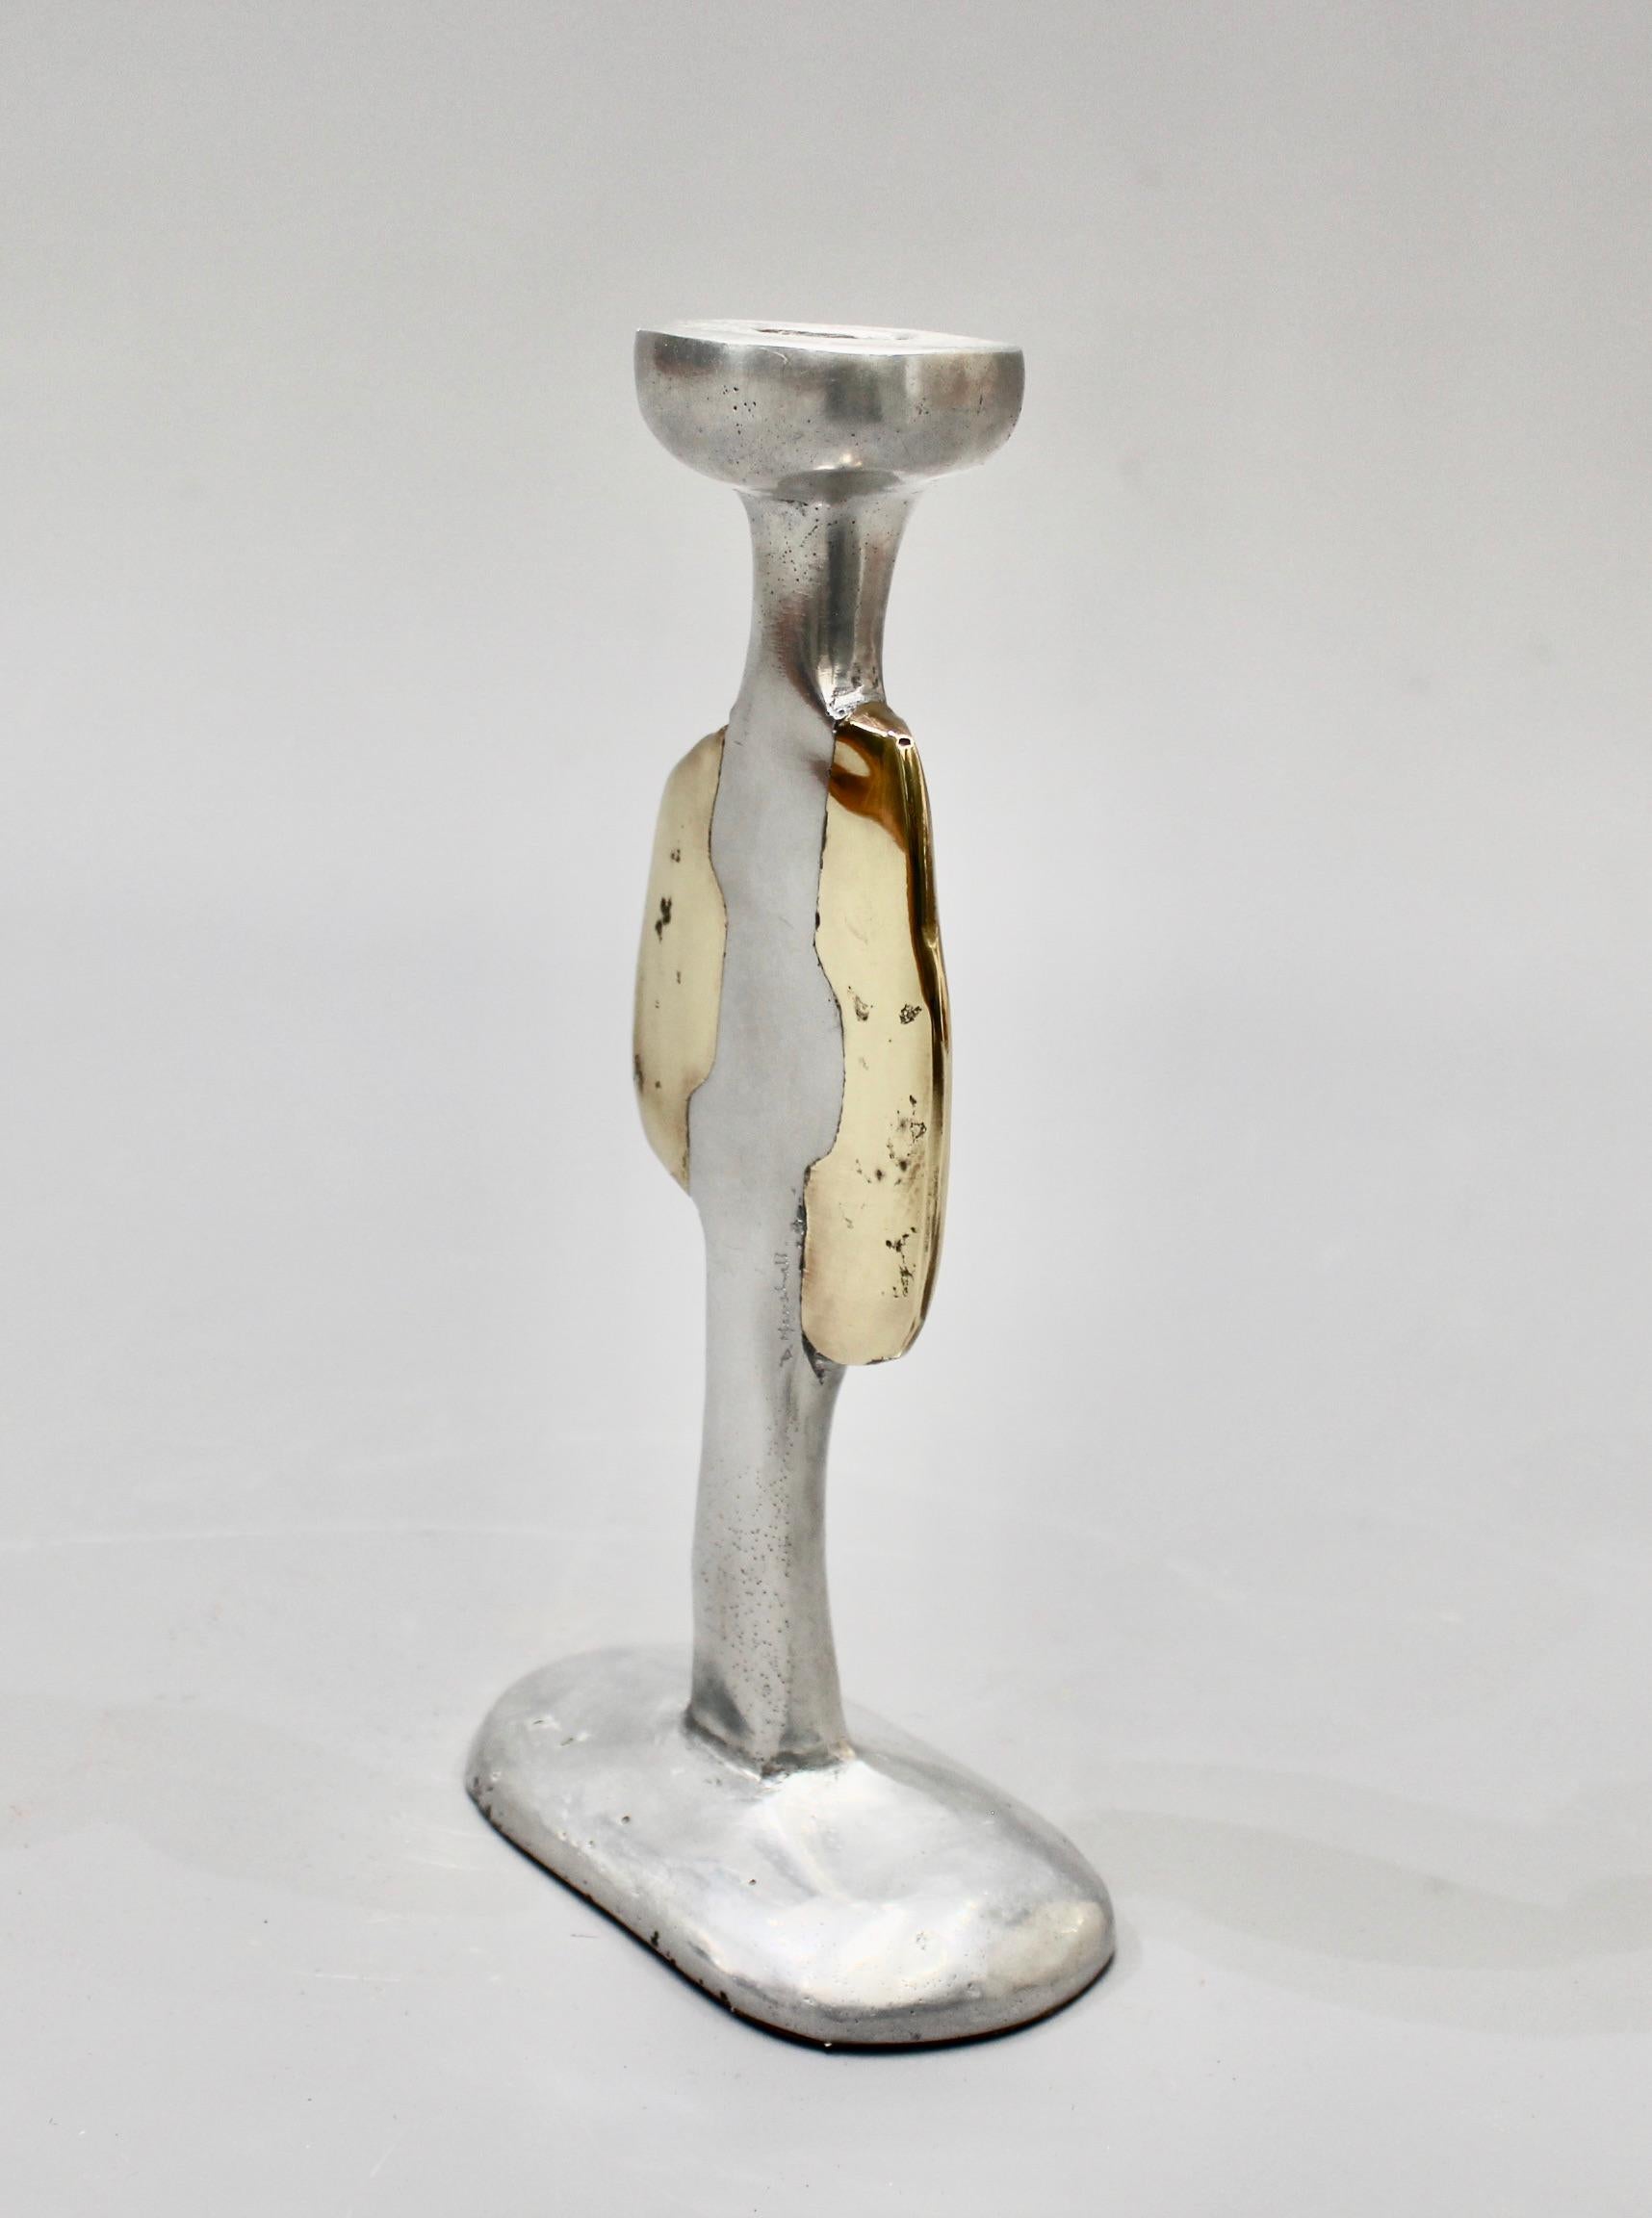 Spanish Aluminium and Brass Candlestick by David Marshall, circa 1970s